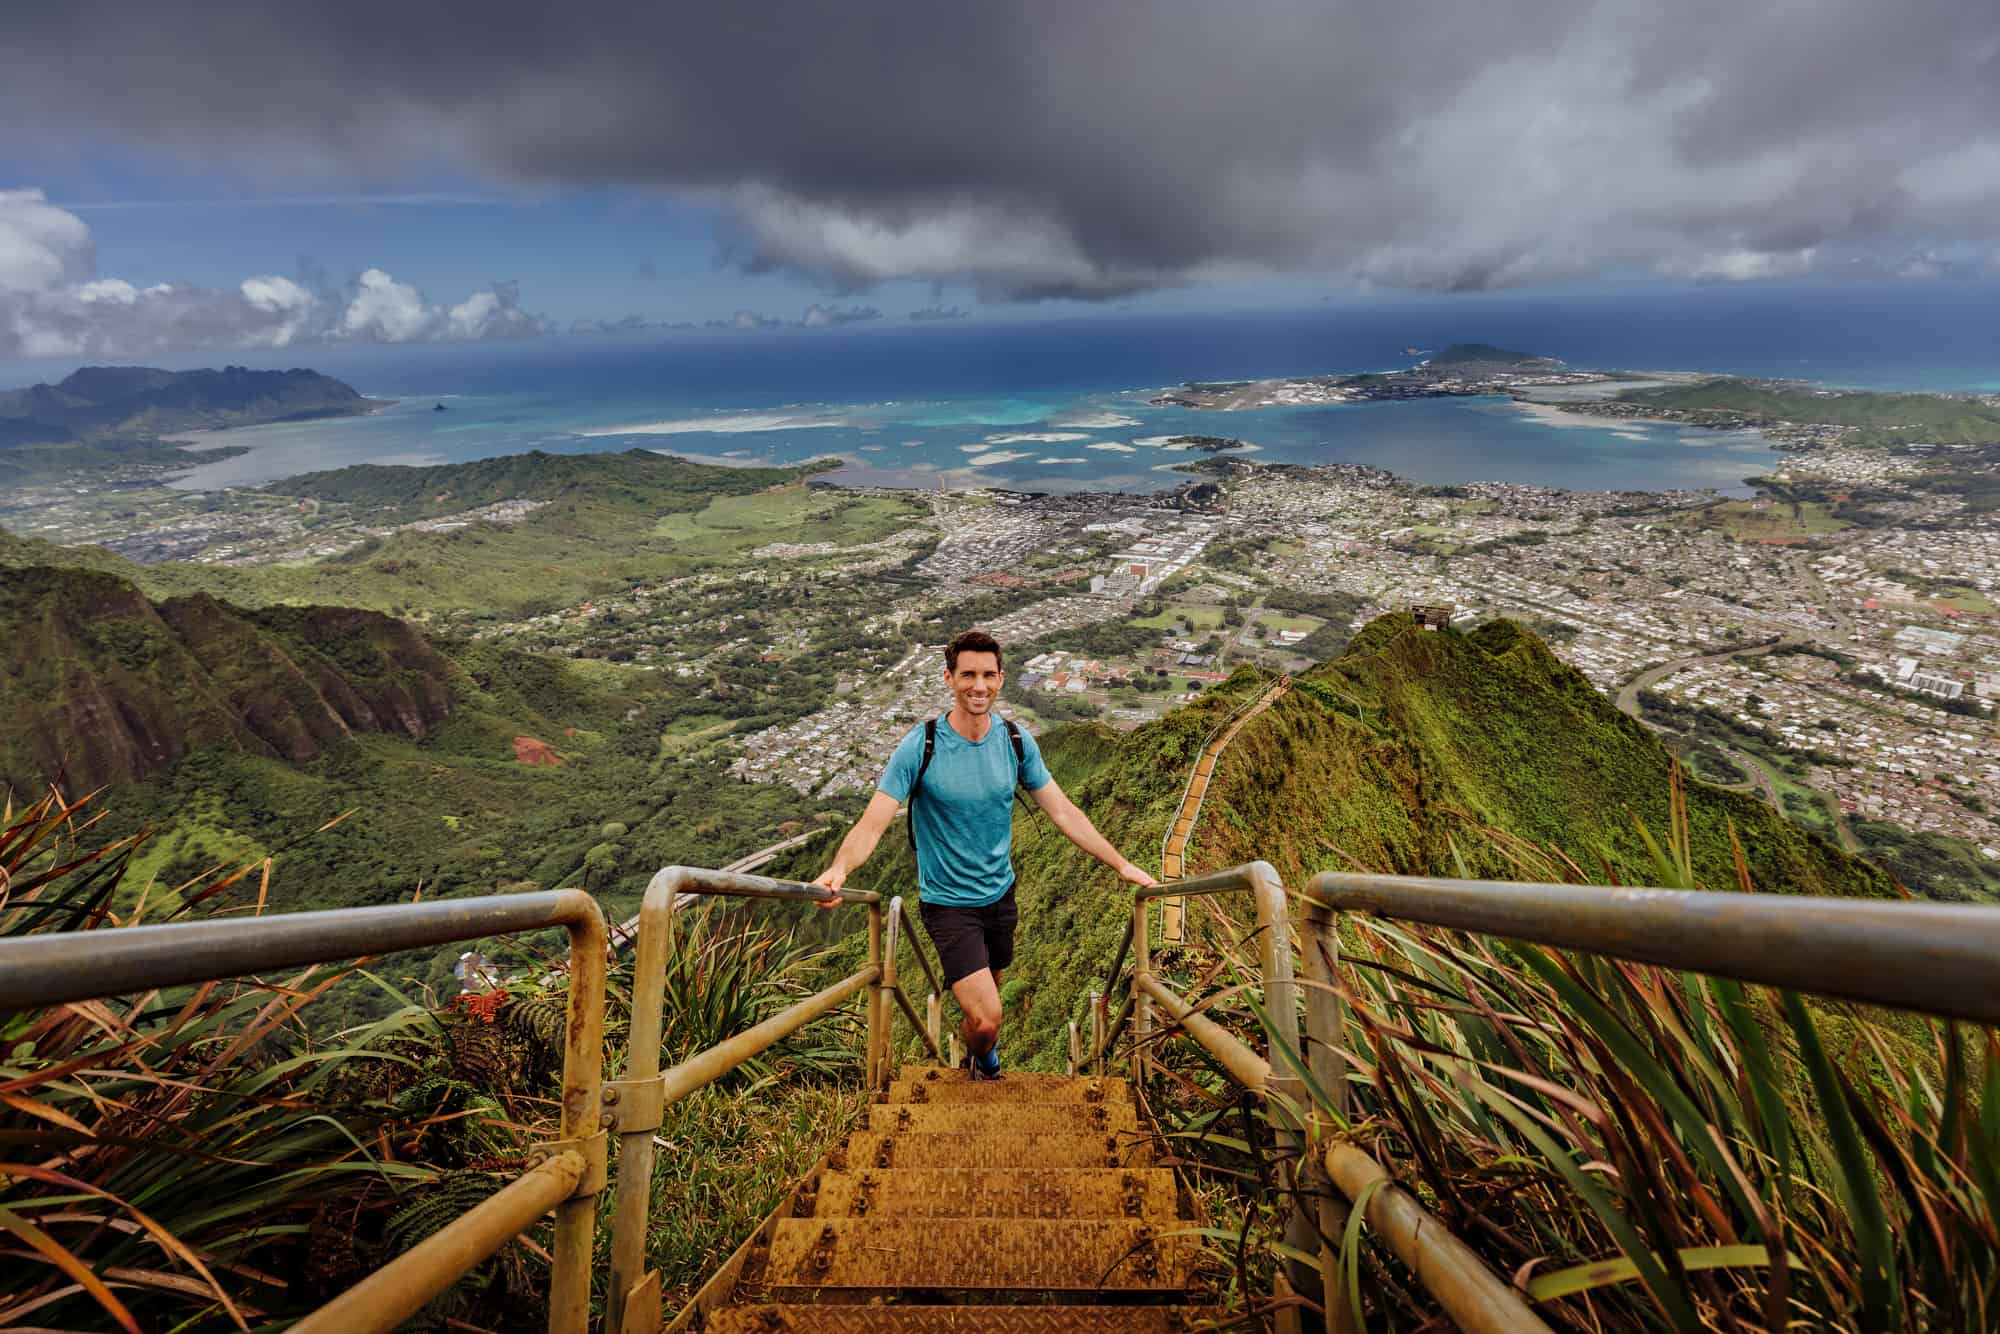 Hawaii's famous Haiku Stairs may close in 2022